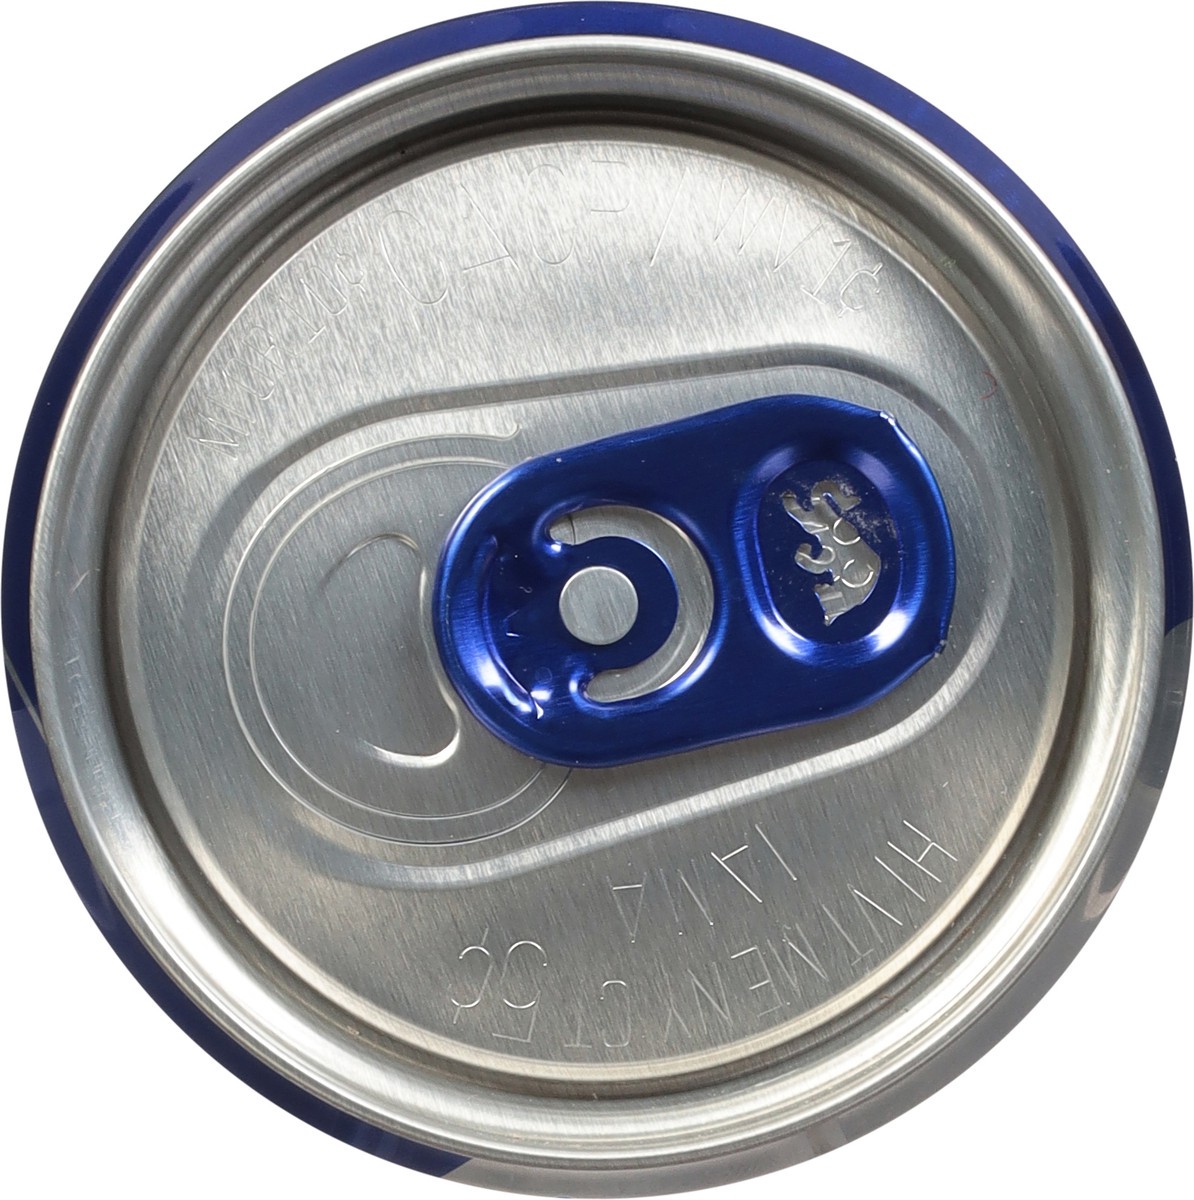 slide 7 of 9, Red Bull The Blue Edition Blueberry Energy Drink 12 fl oz, 12 fl oz